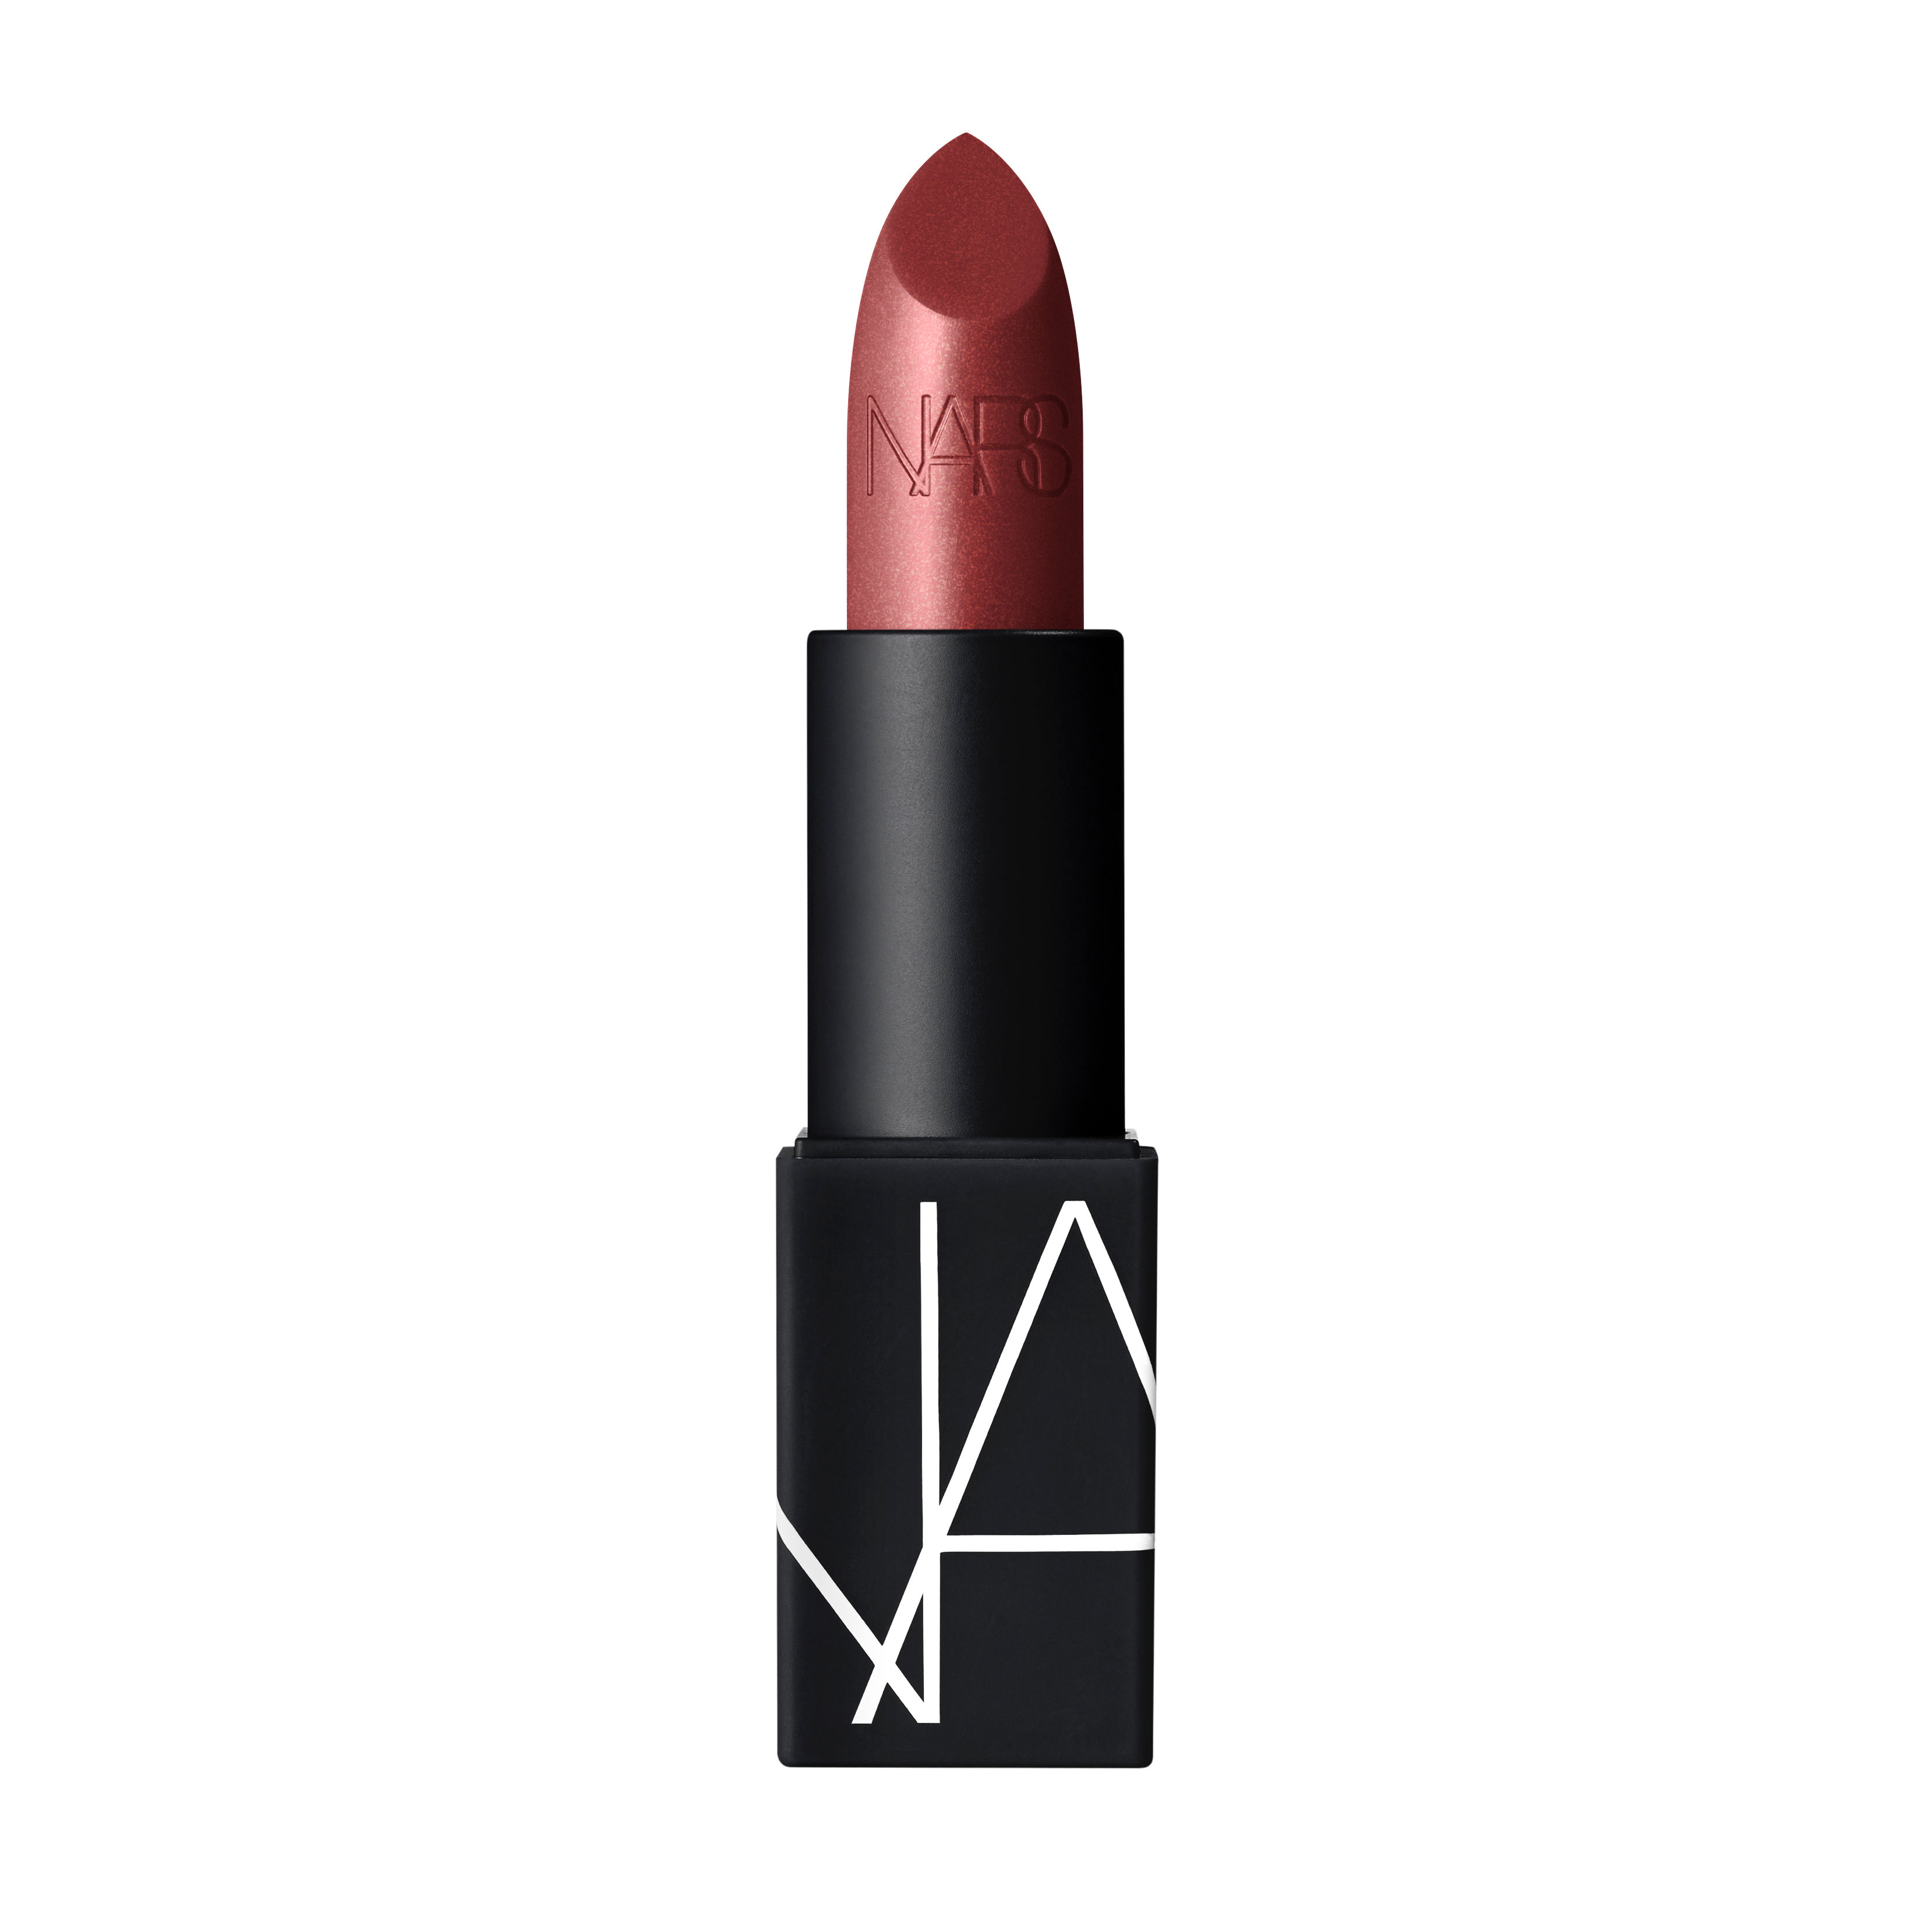 NARS Dressed to Kill Satin Lipstick Product Image